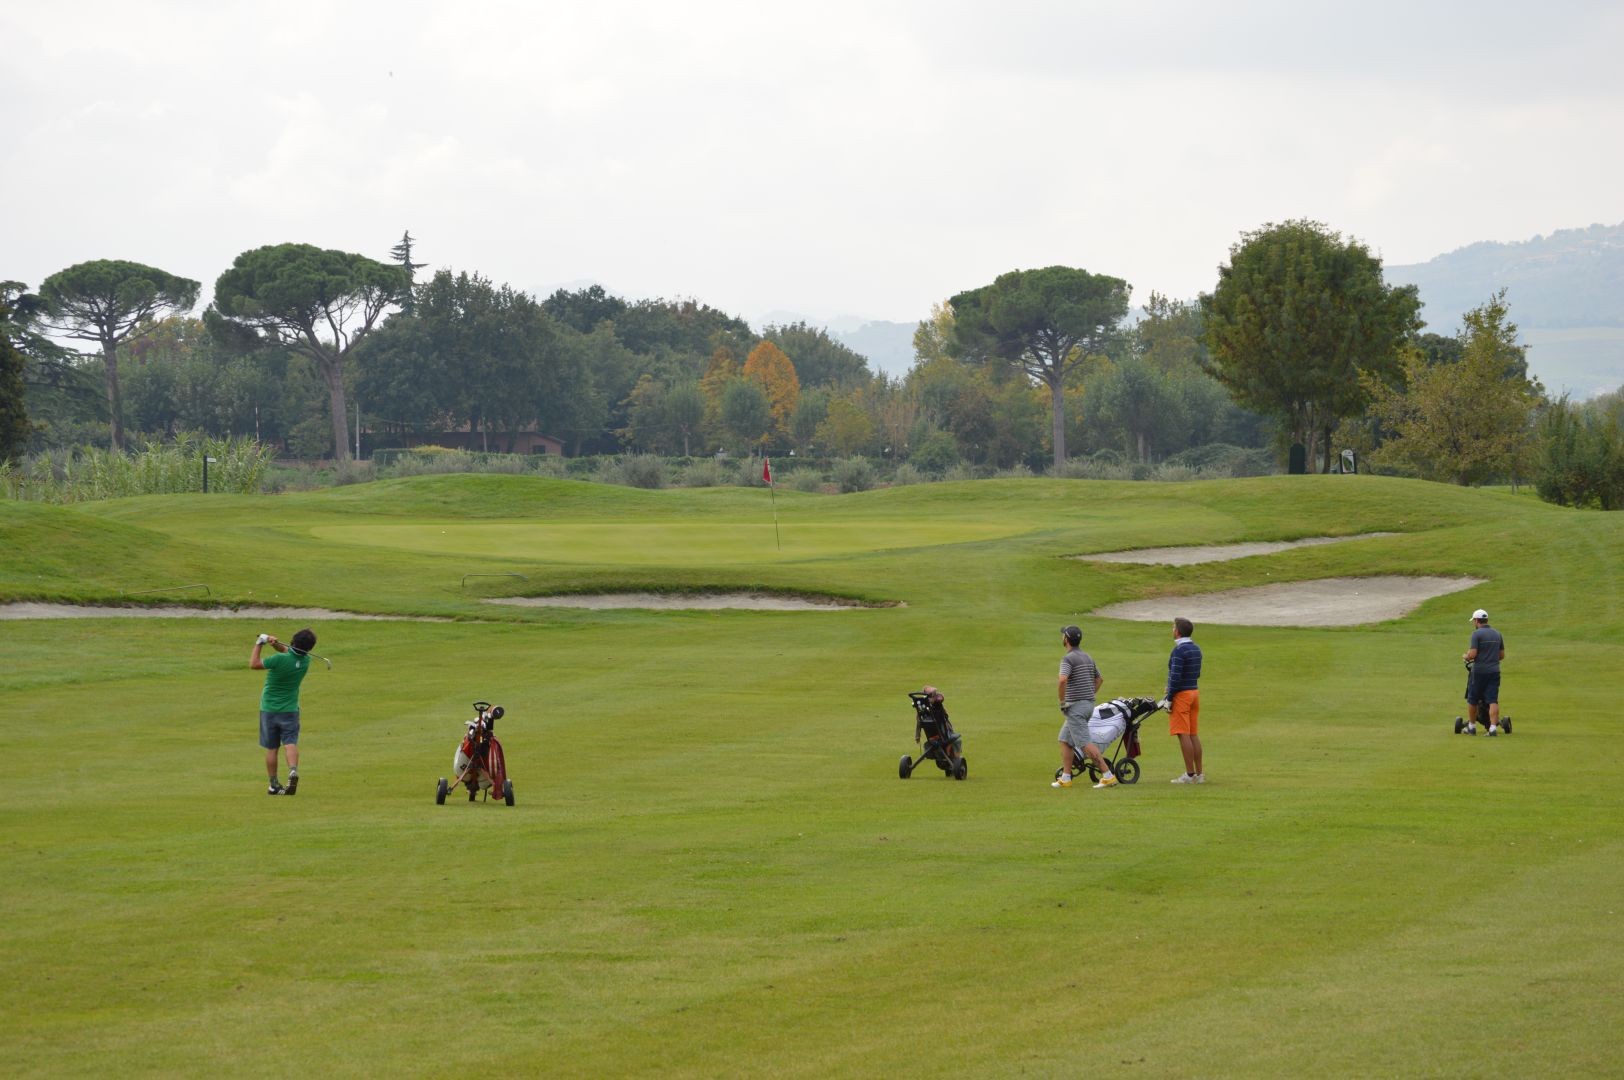 Rimini Golf Club